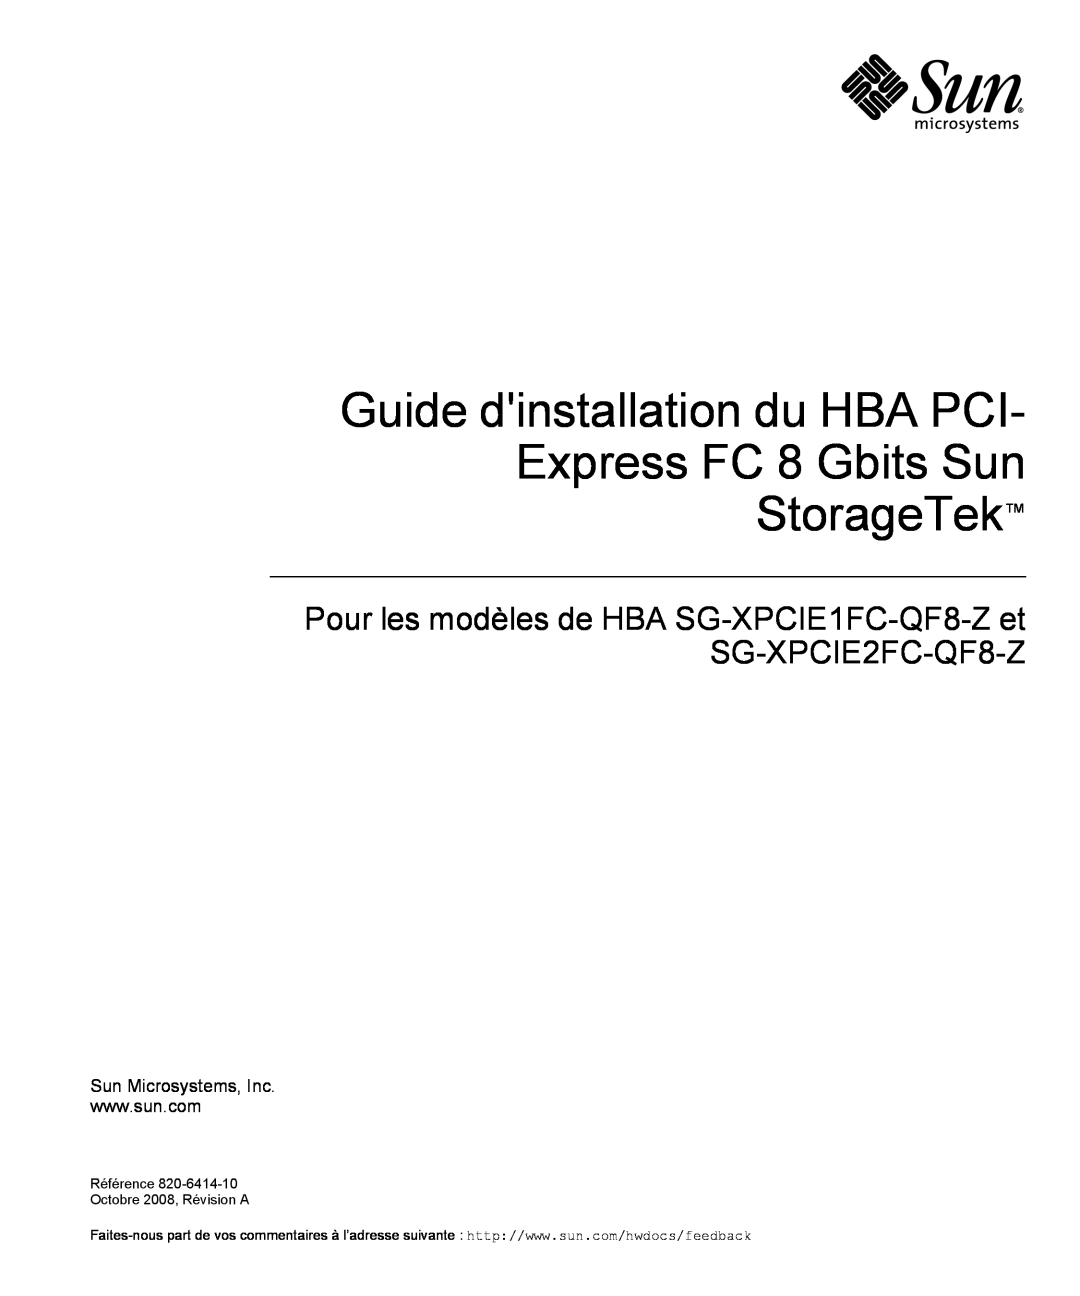 Sun Microsystems SG-XPCIE1FC-QF8-Z manual Guide dinstallation du HBA PCI Express FC 8 Gbits Sun StorageTek 